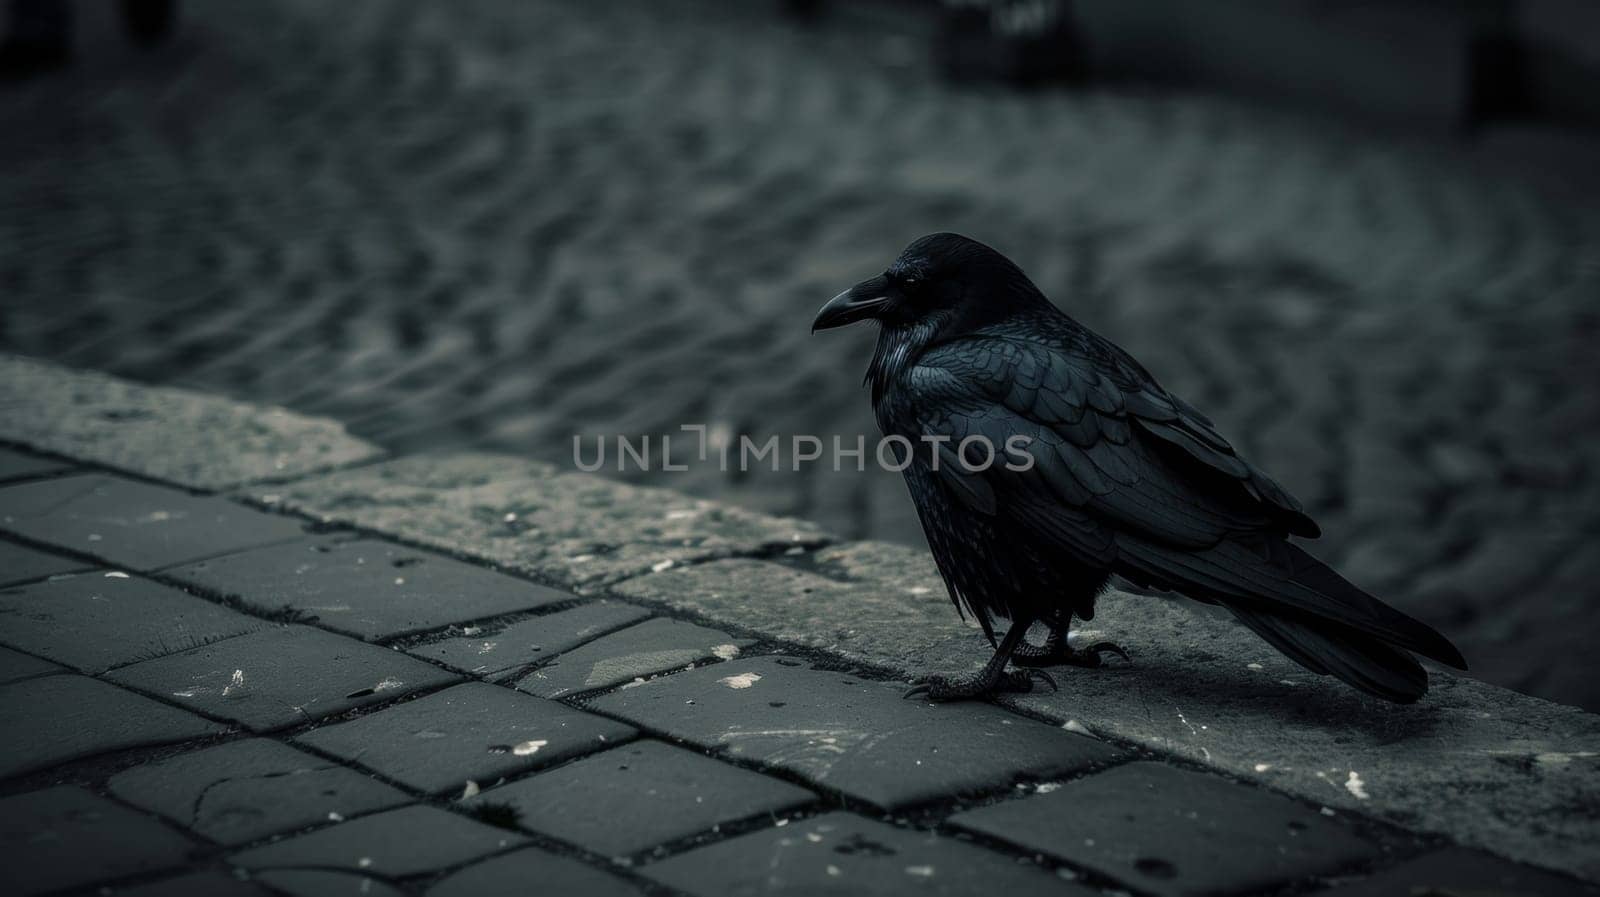 A black bird standing on a brick sidewalk in the rain